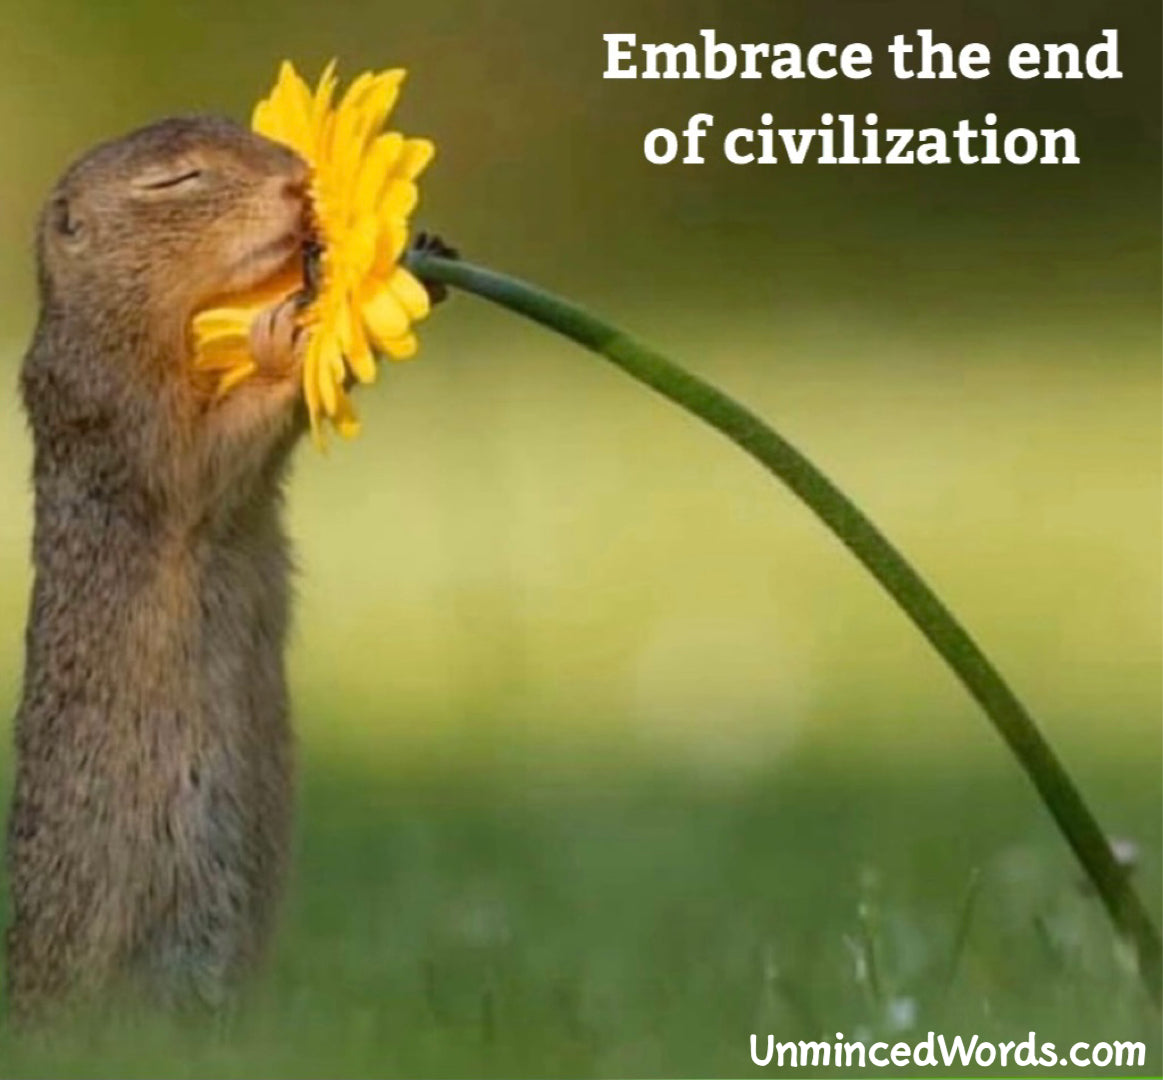 Embrace the end of civilization